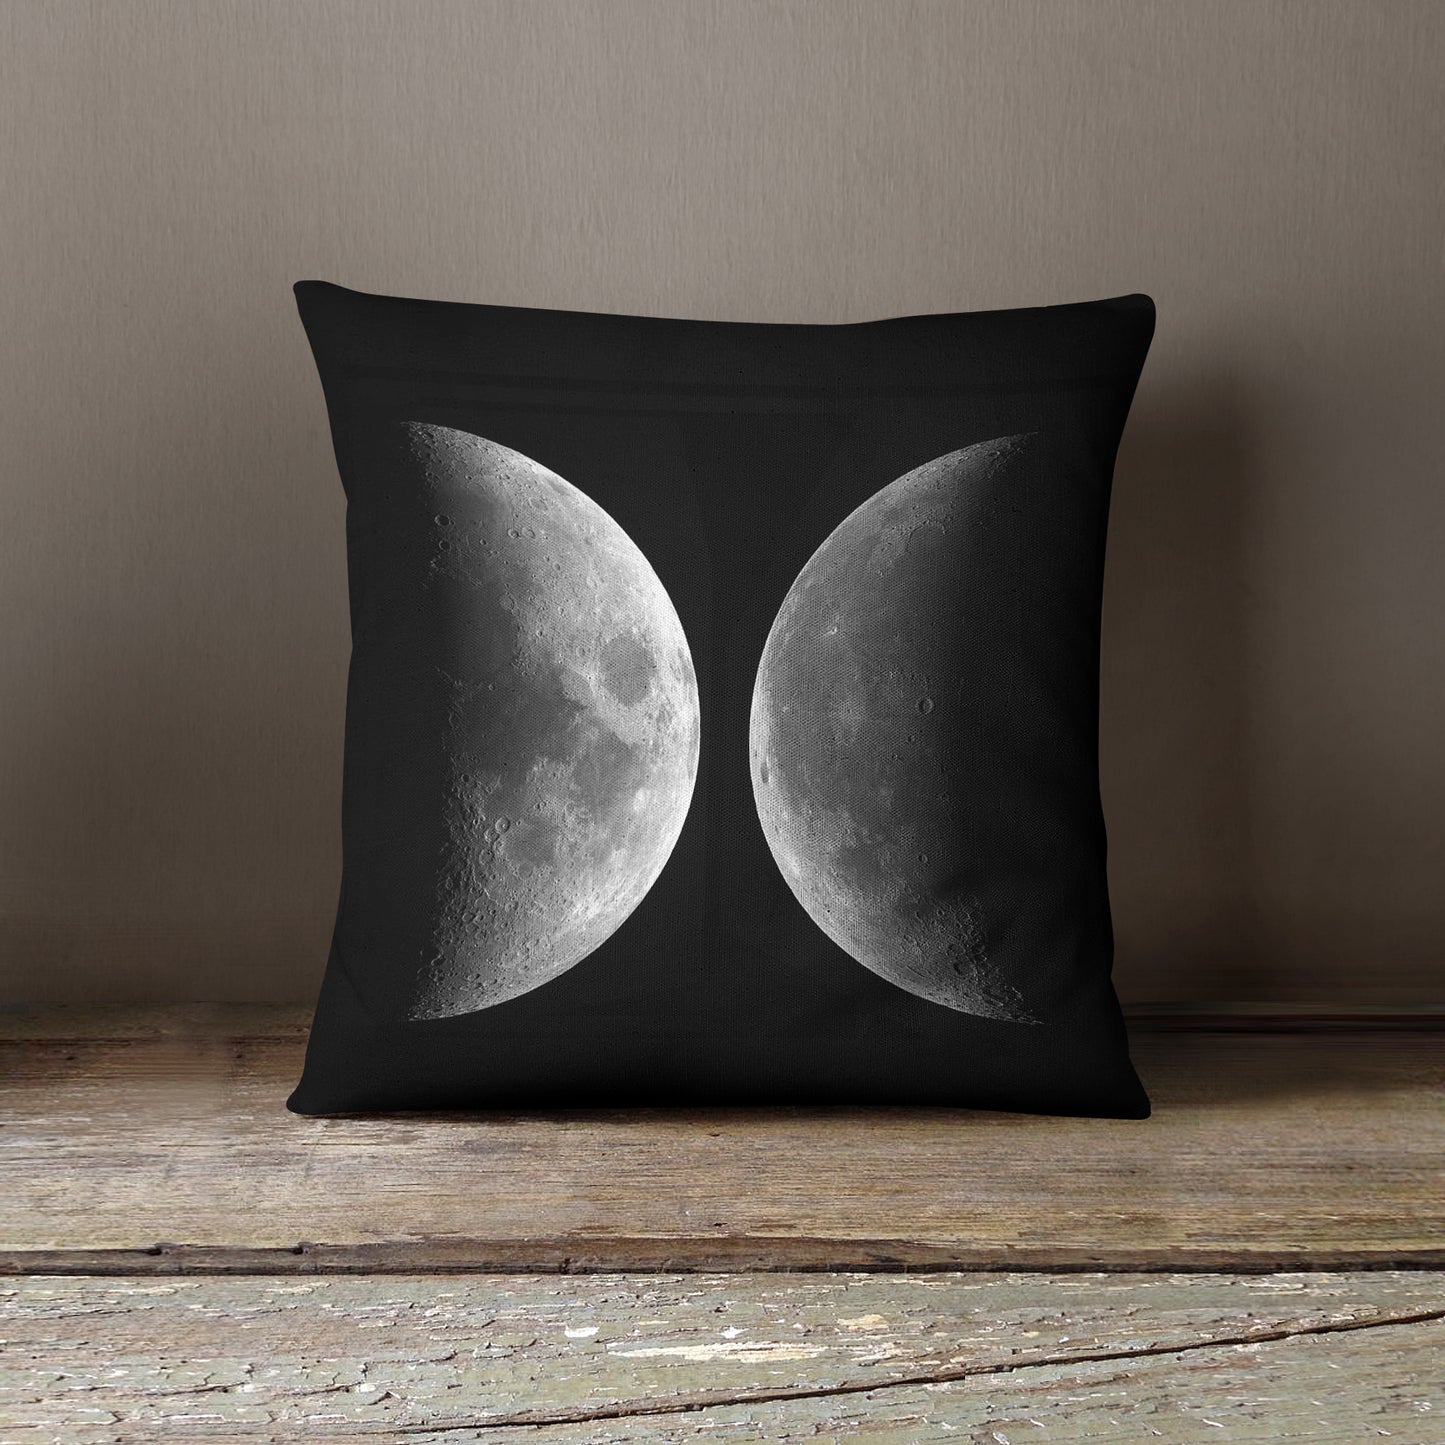 Space Cushion - Moon Reflection - The Tiny Art Co